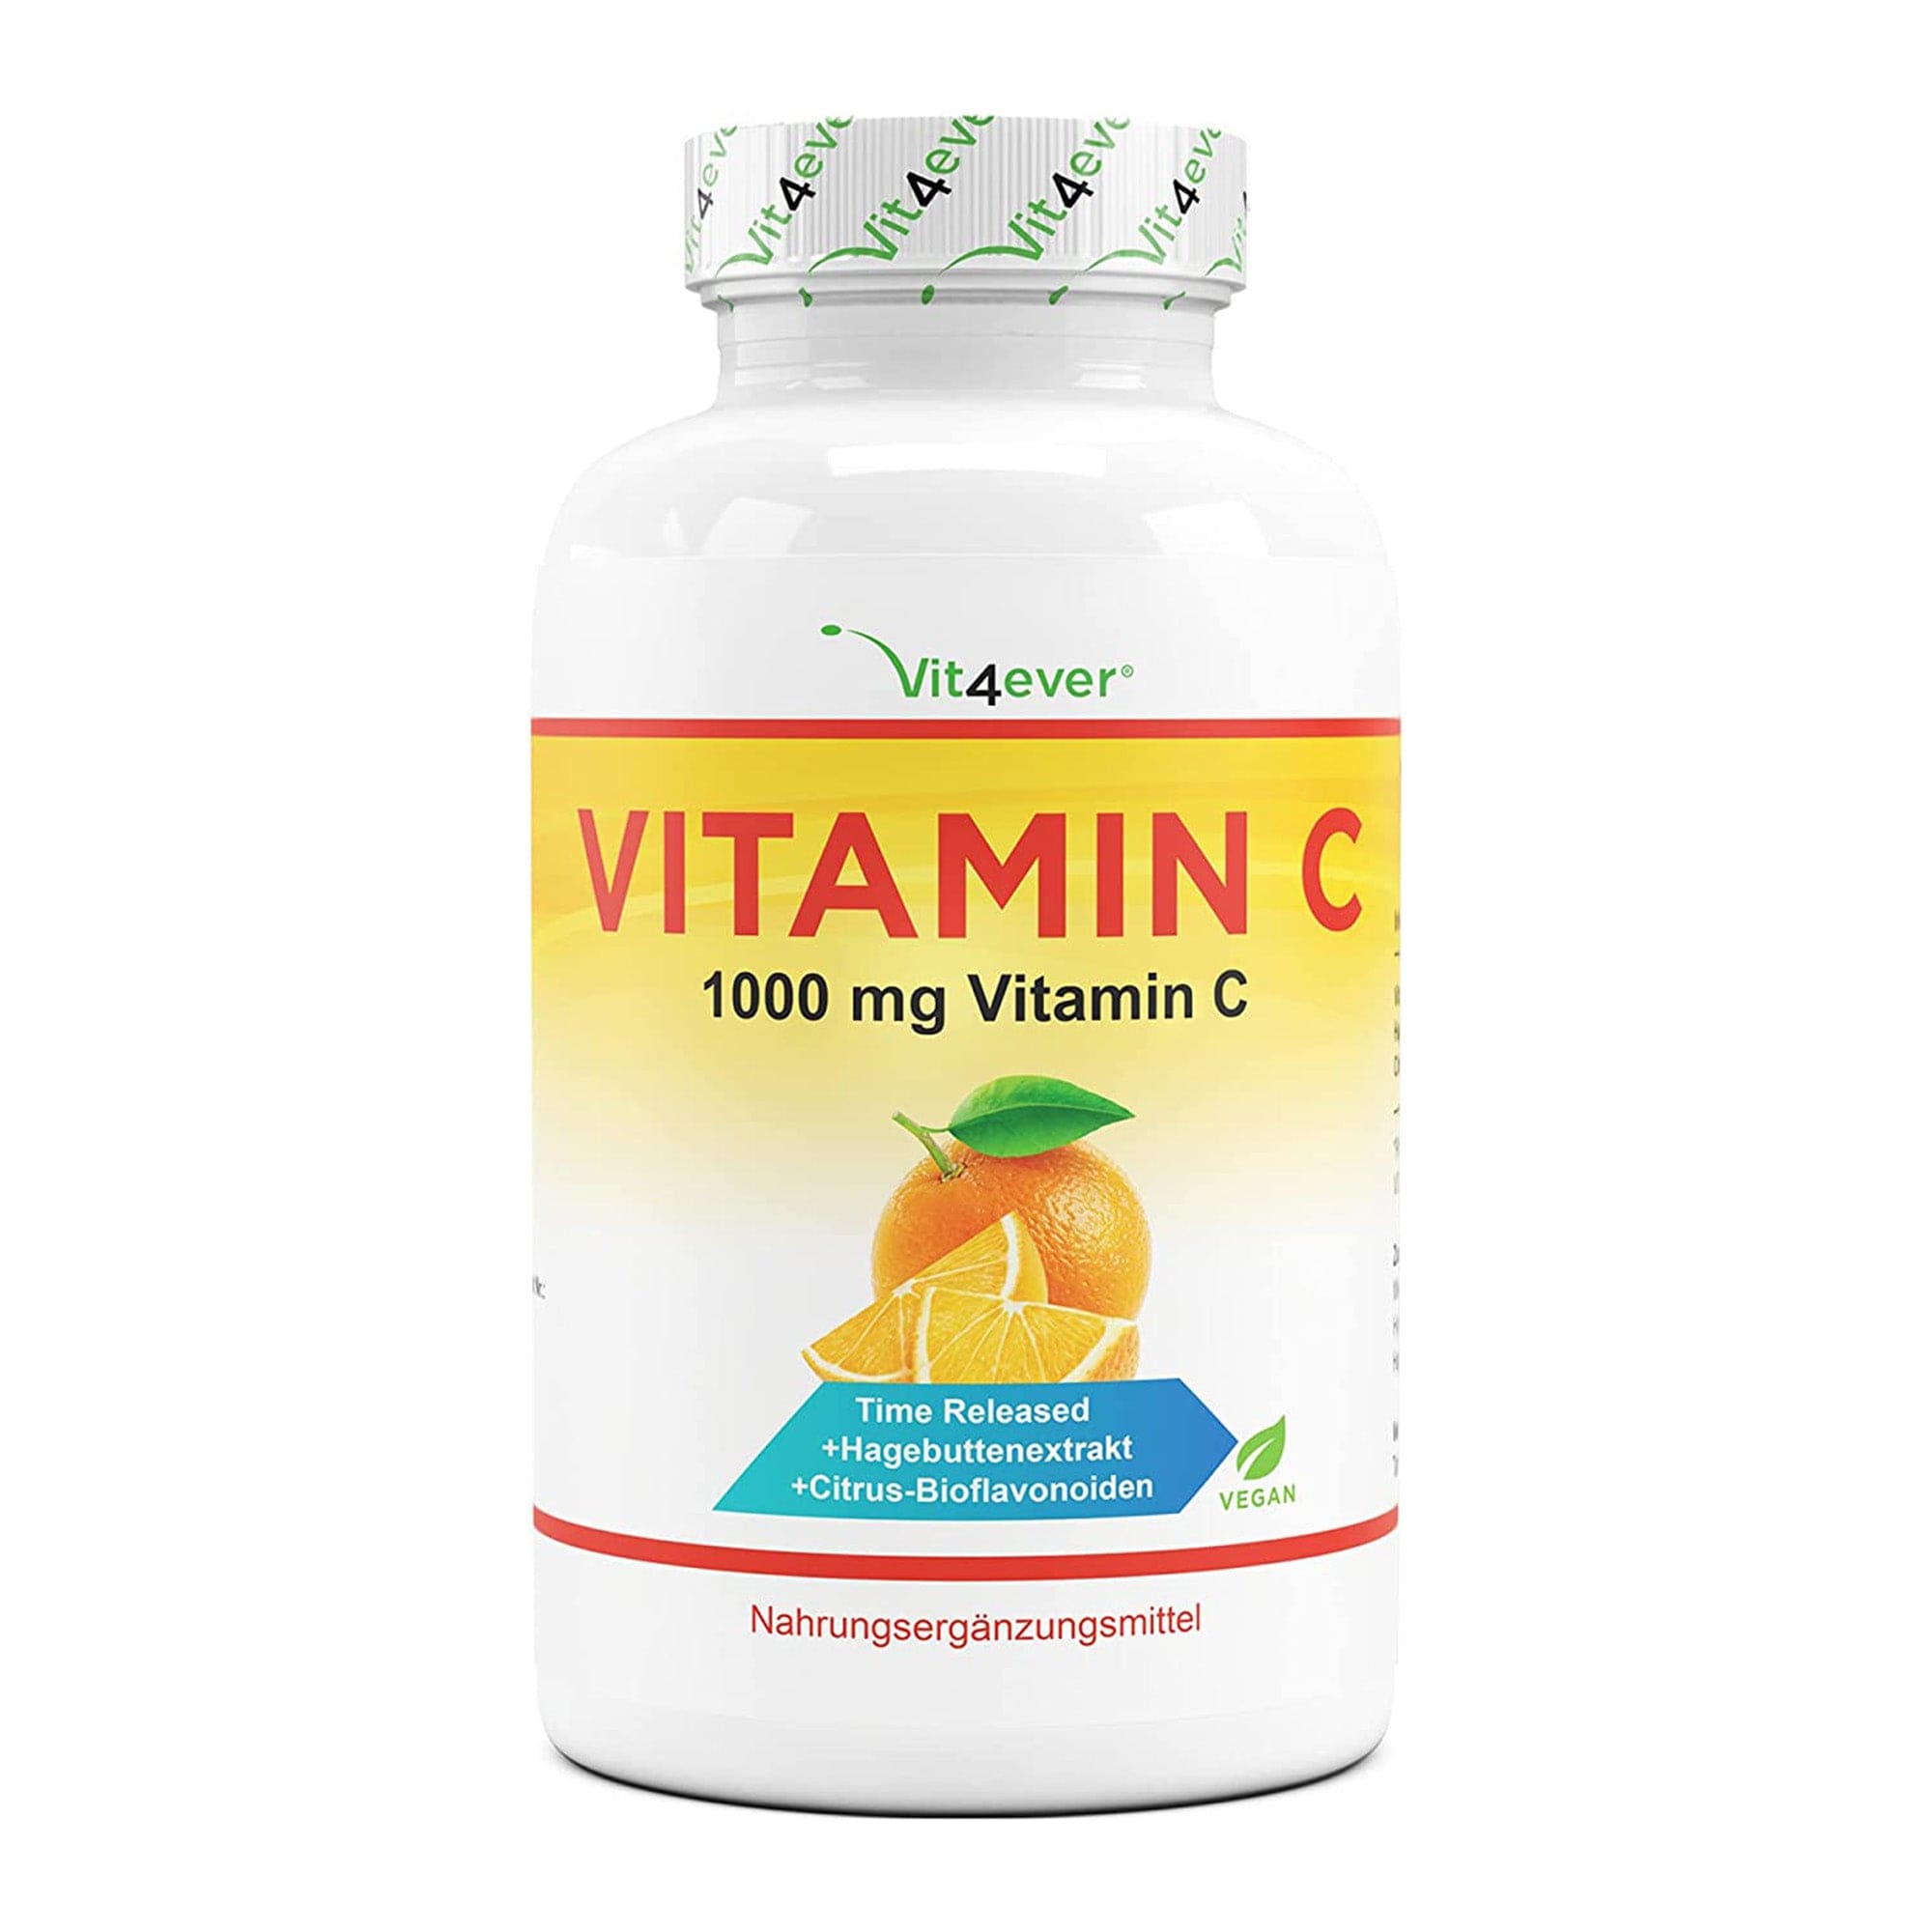 Vit4ever vitamine C 1000 mg